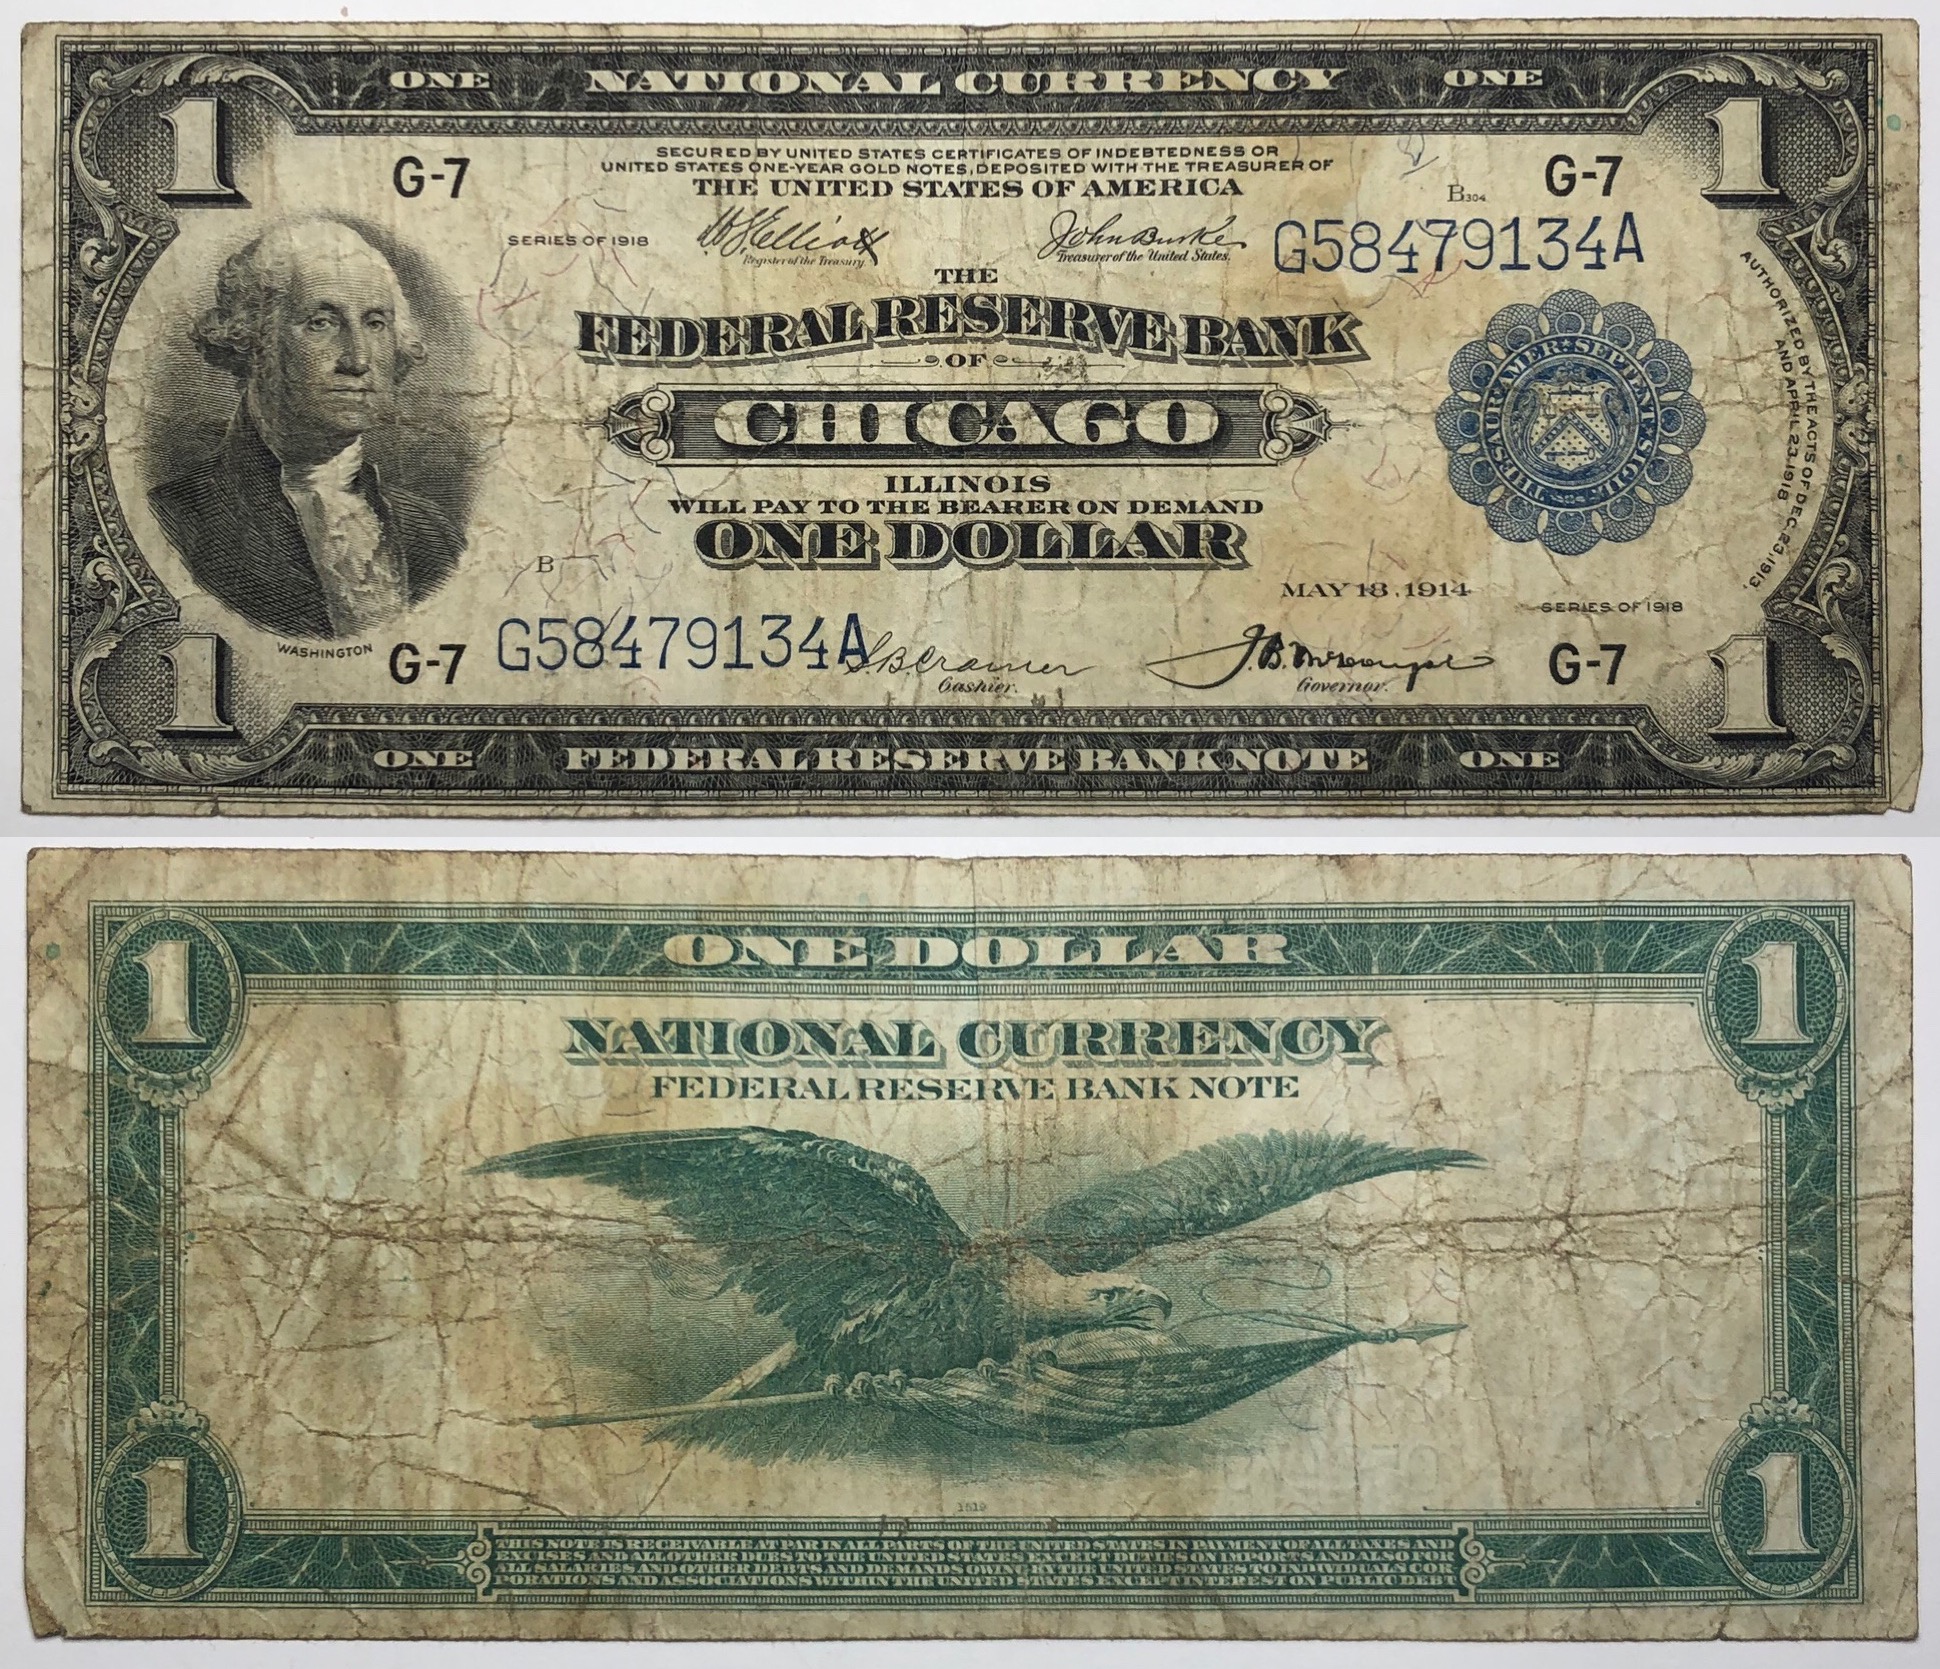 1 июля доллар. 1918 $5,000 Federal Reserve Note. Банкнота 1 доллар. Первые банкноты США. Купюра 1 доллар США.